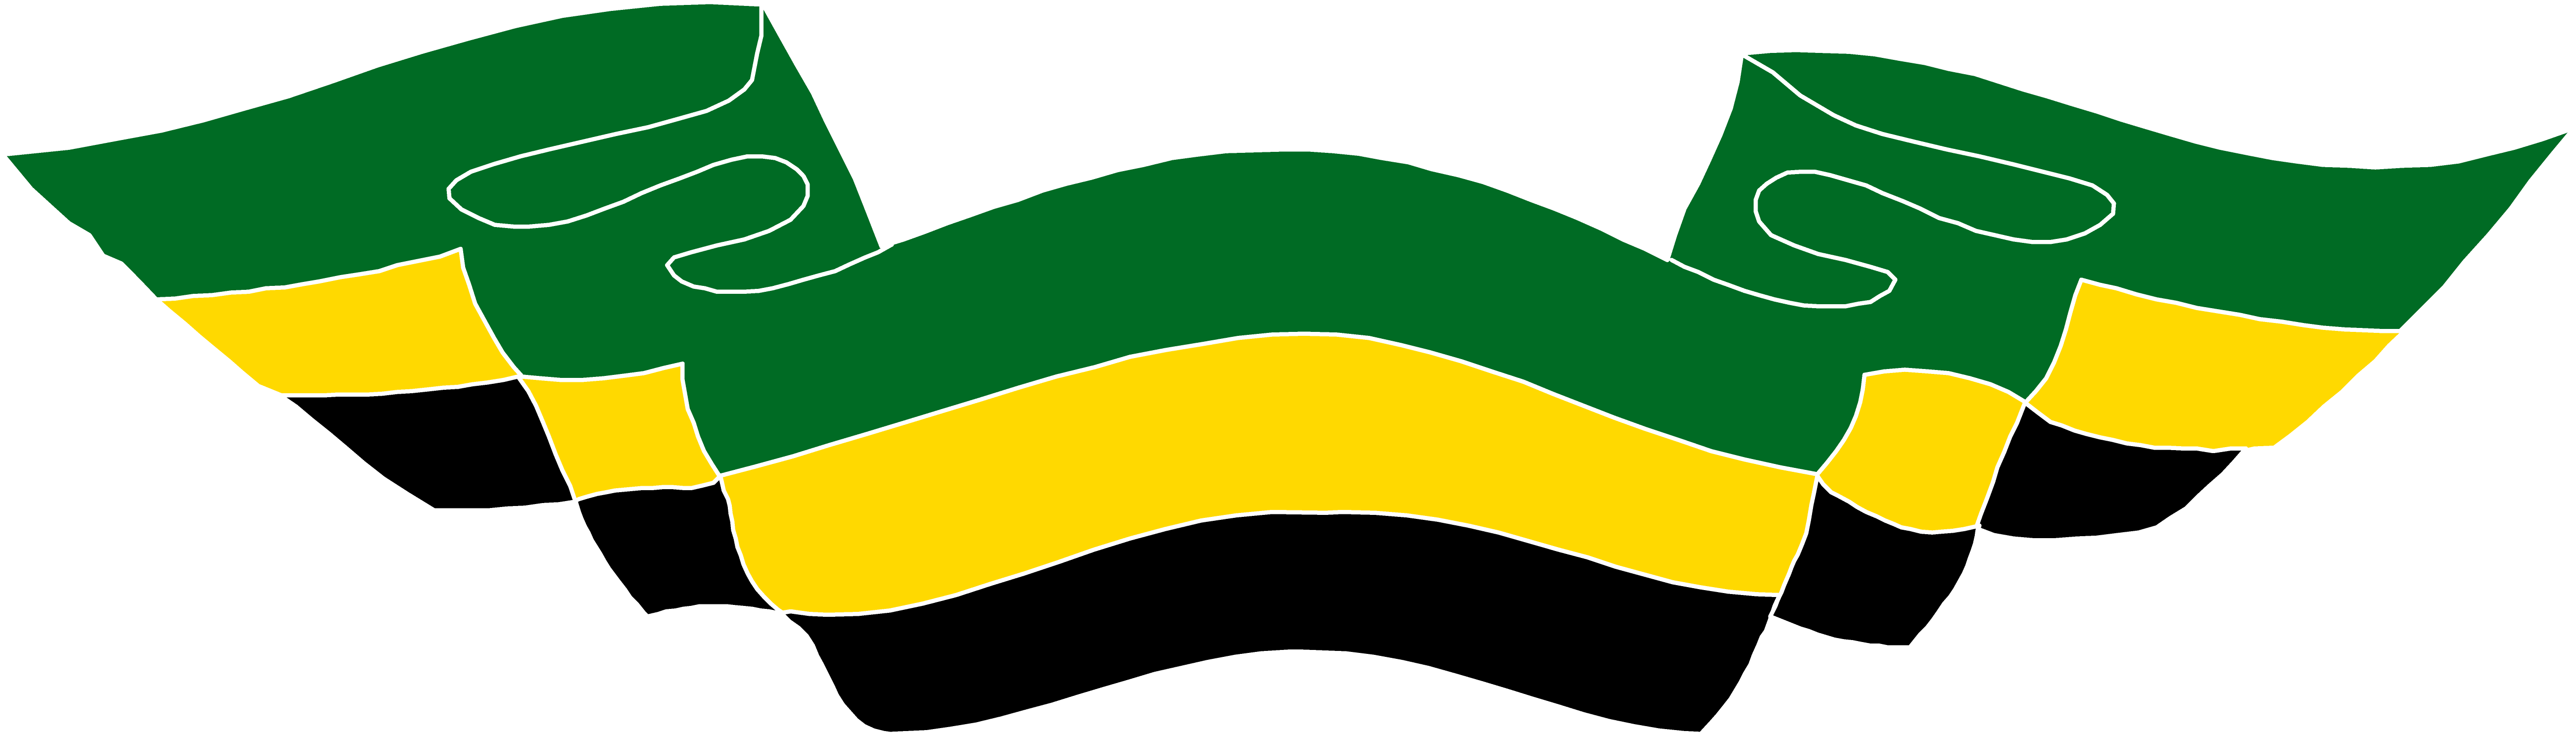 Jamaica Flag Png